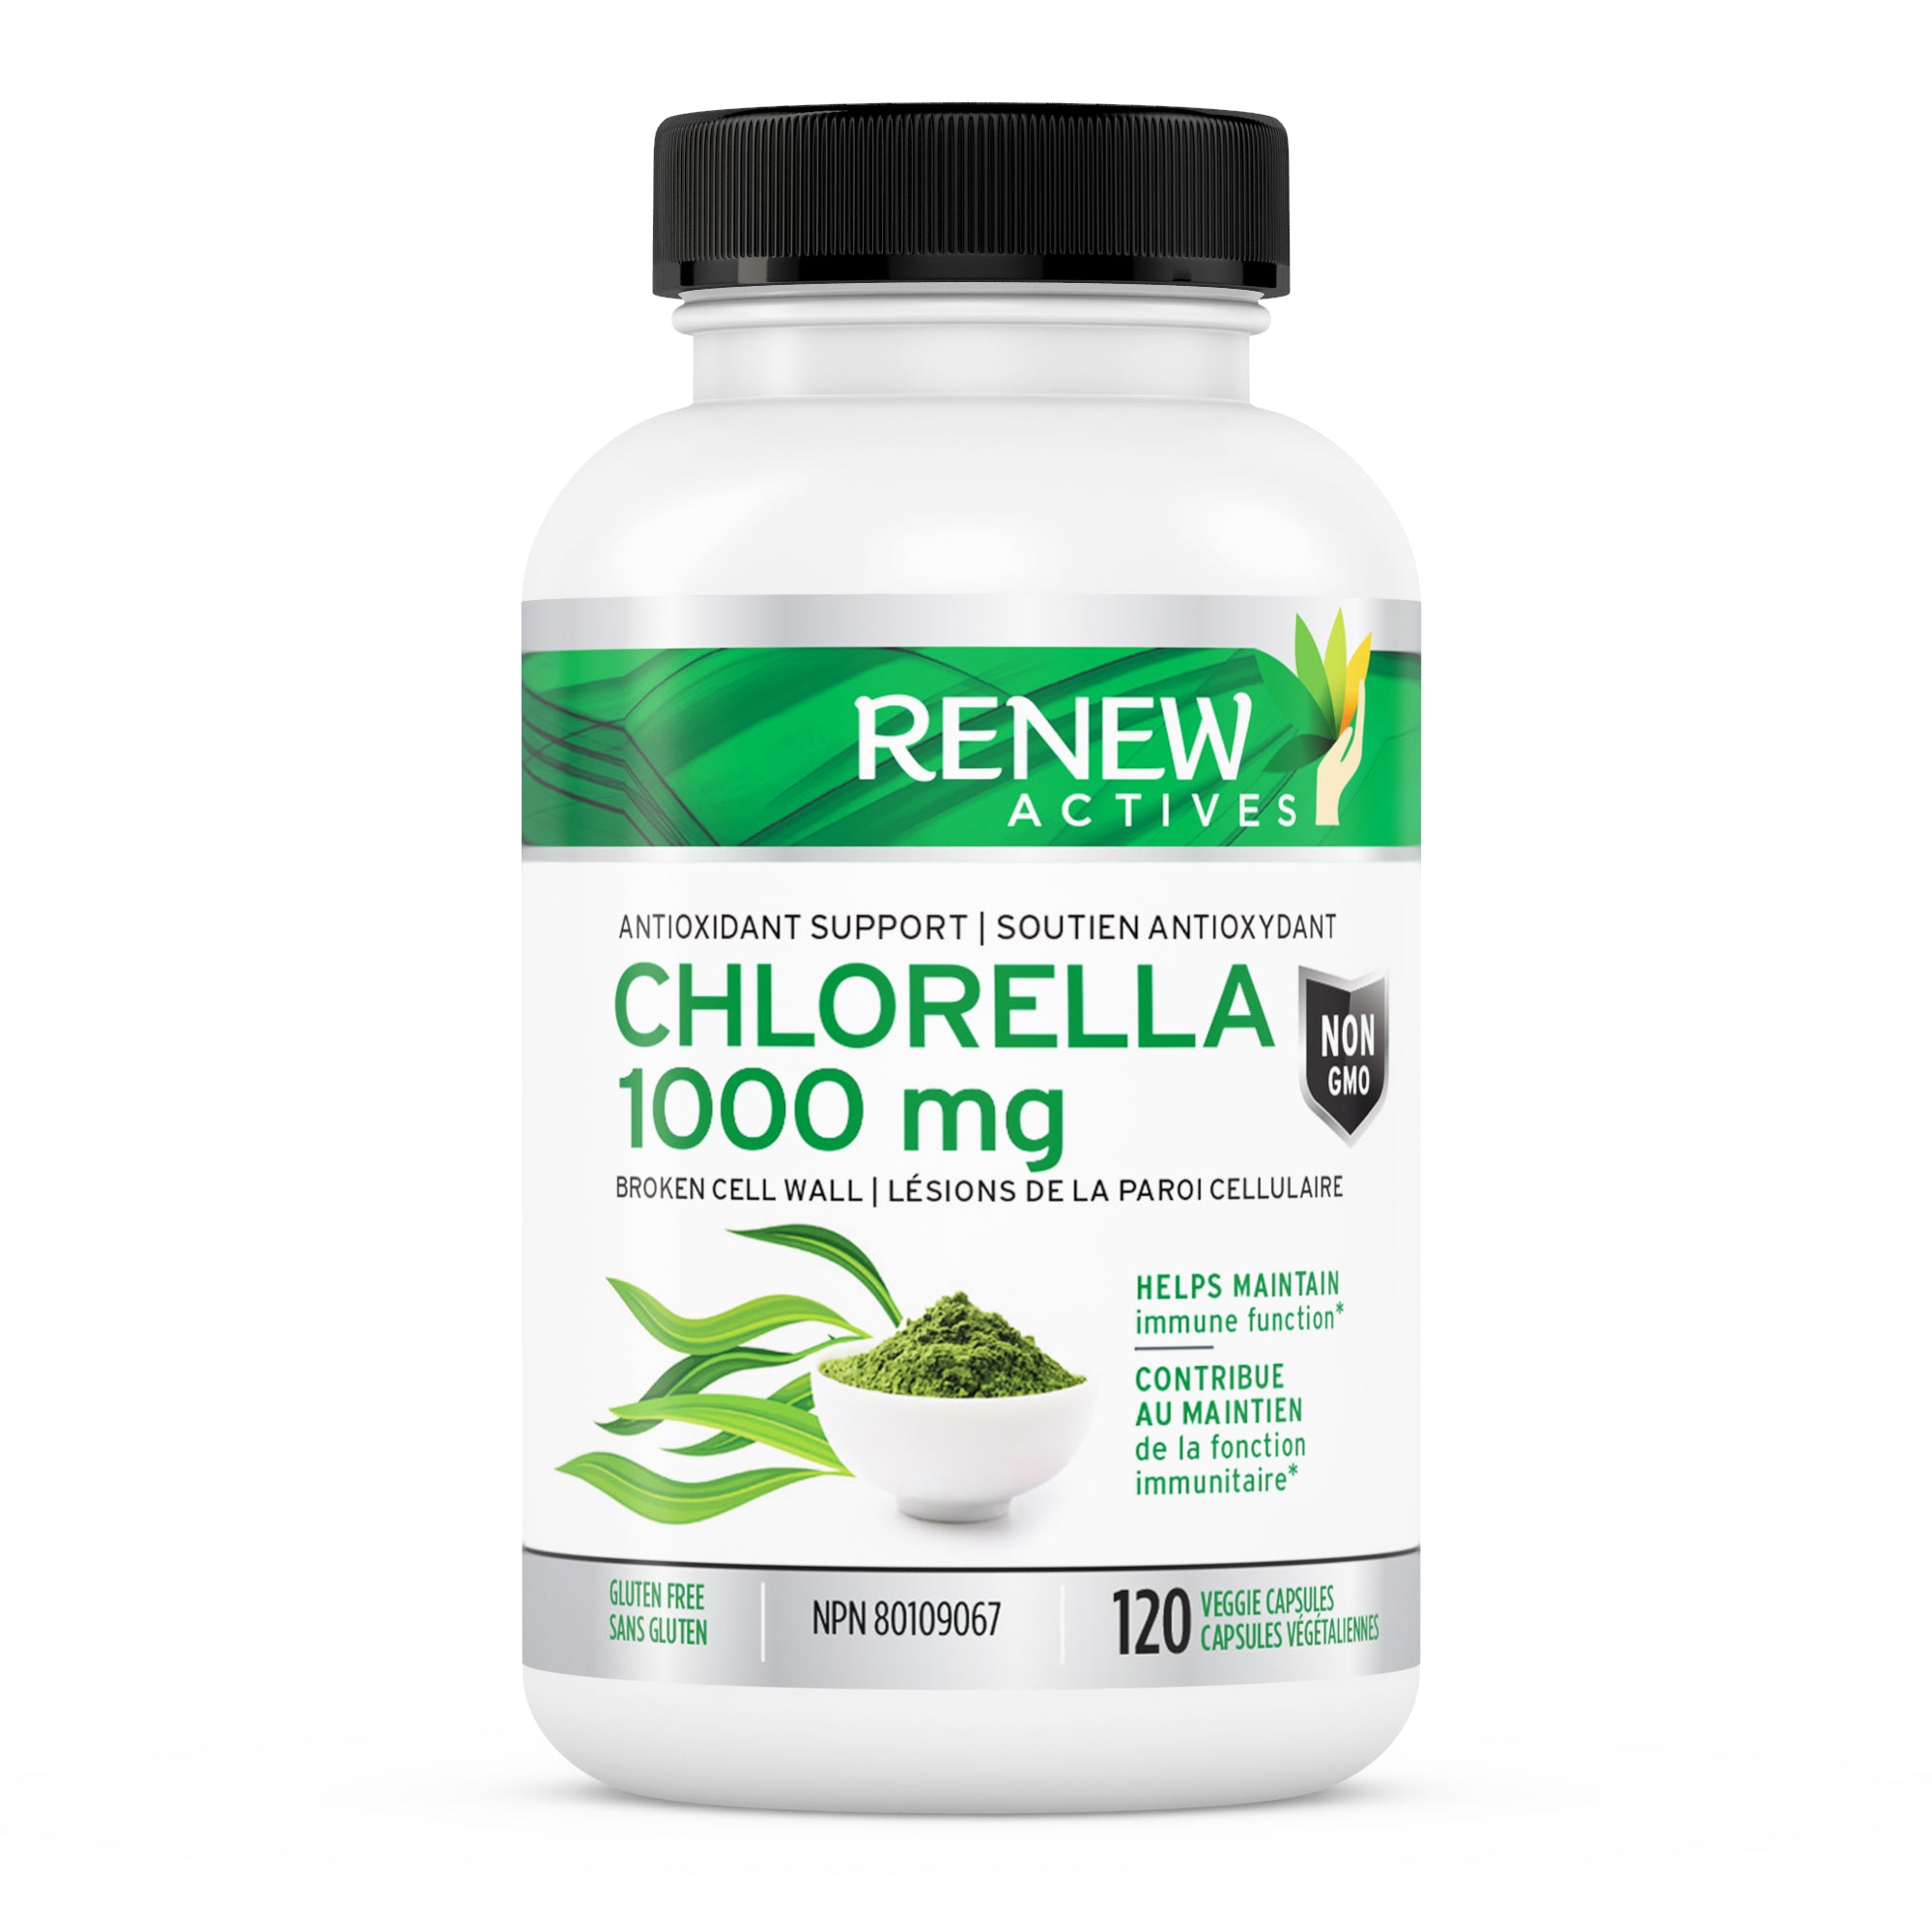 Renew Actives Organic Chlorella - Antioxidant and Immune System Support - 120 Vegan Capsules.